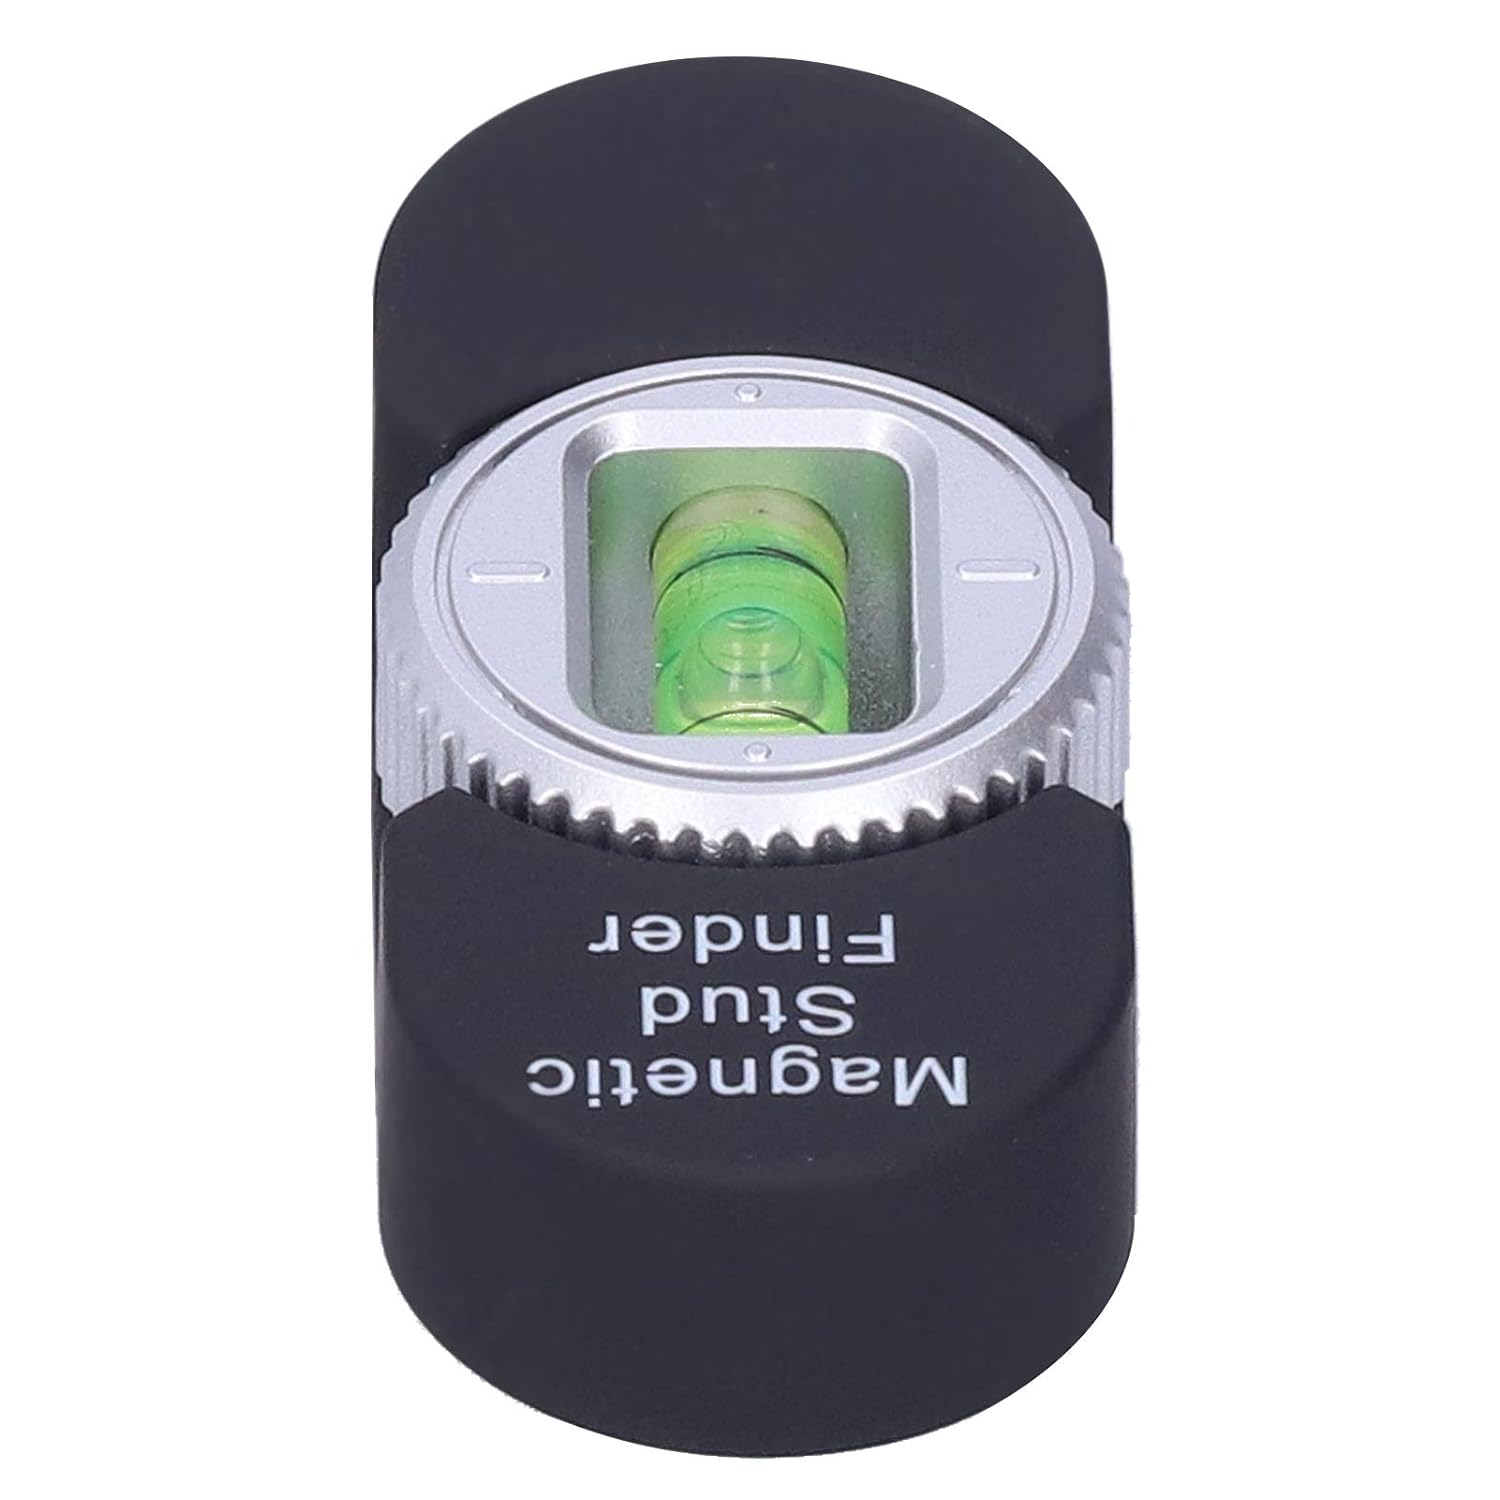 TOPINCN Stud Finder, Magnetic Stud Finder Portable Metal Detector Detection Electrical Equipment for Steel Nails Screws Detecting Metals (Black)